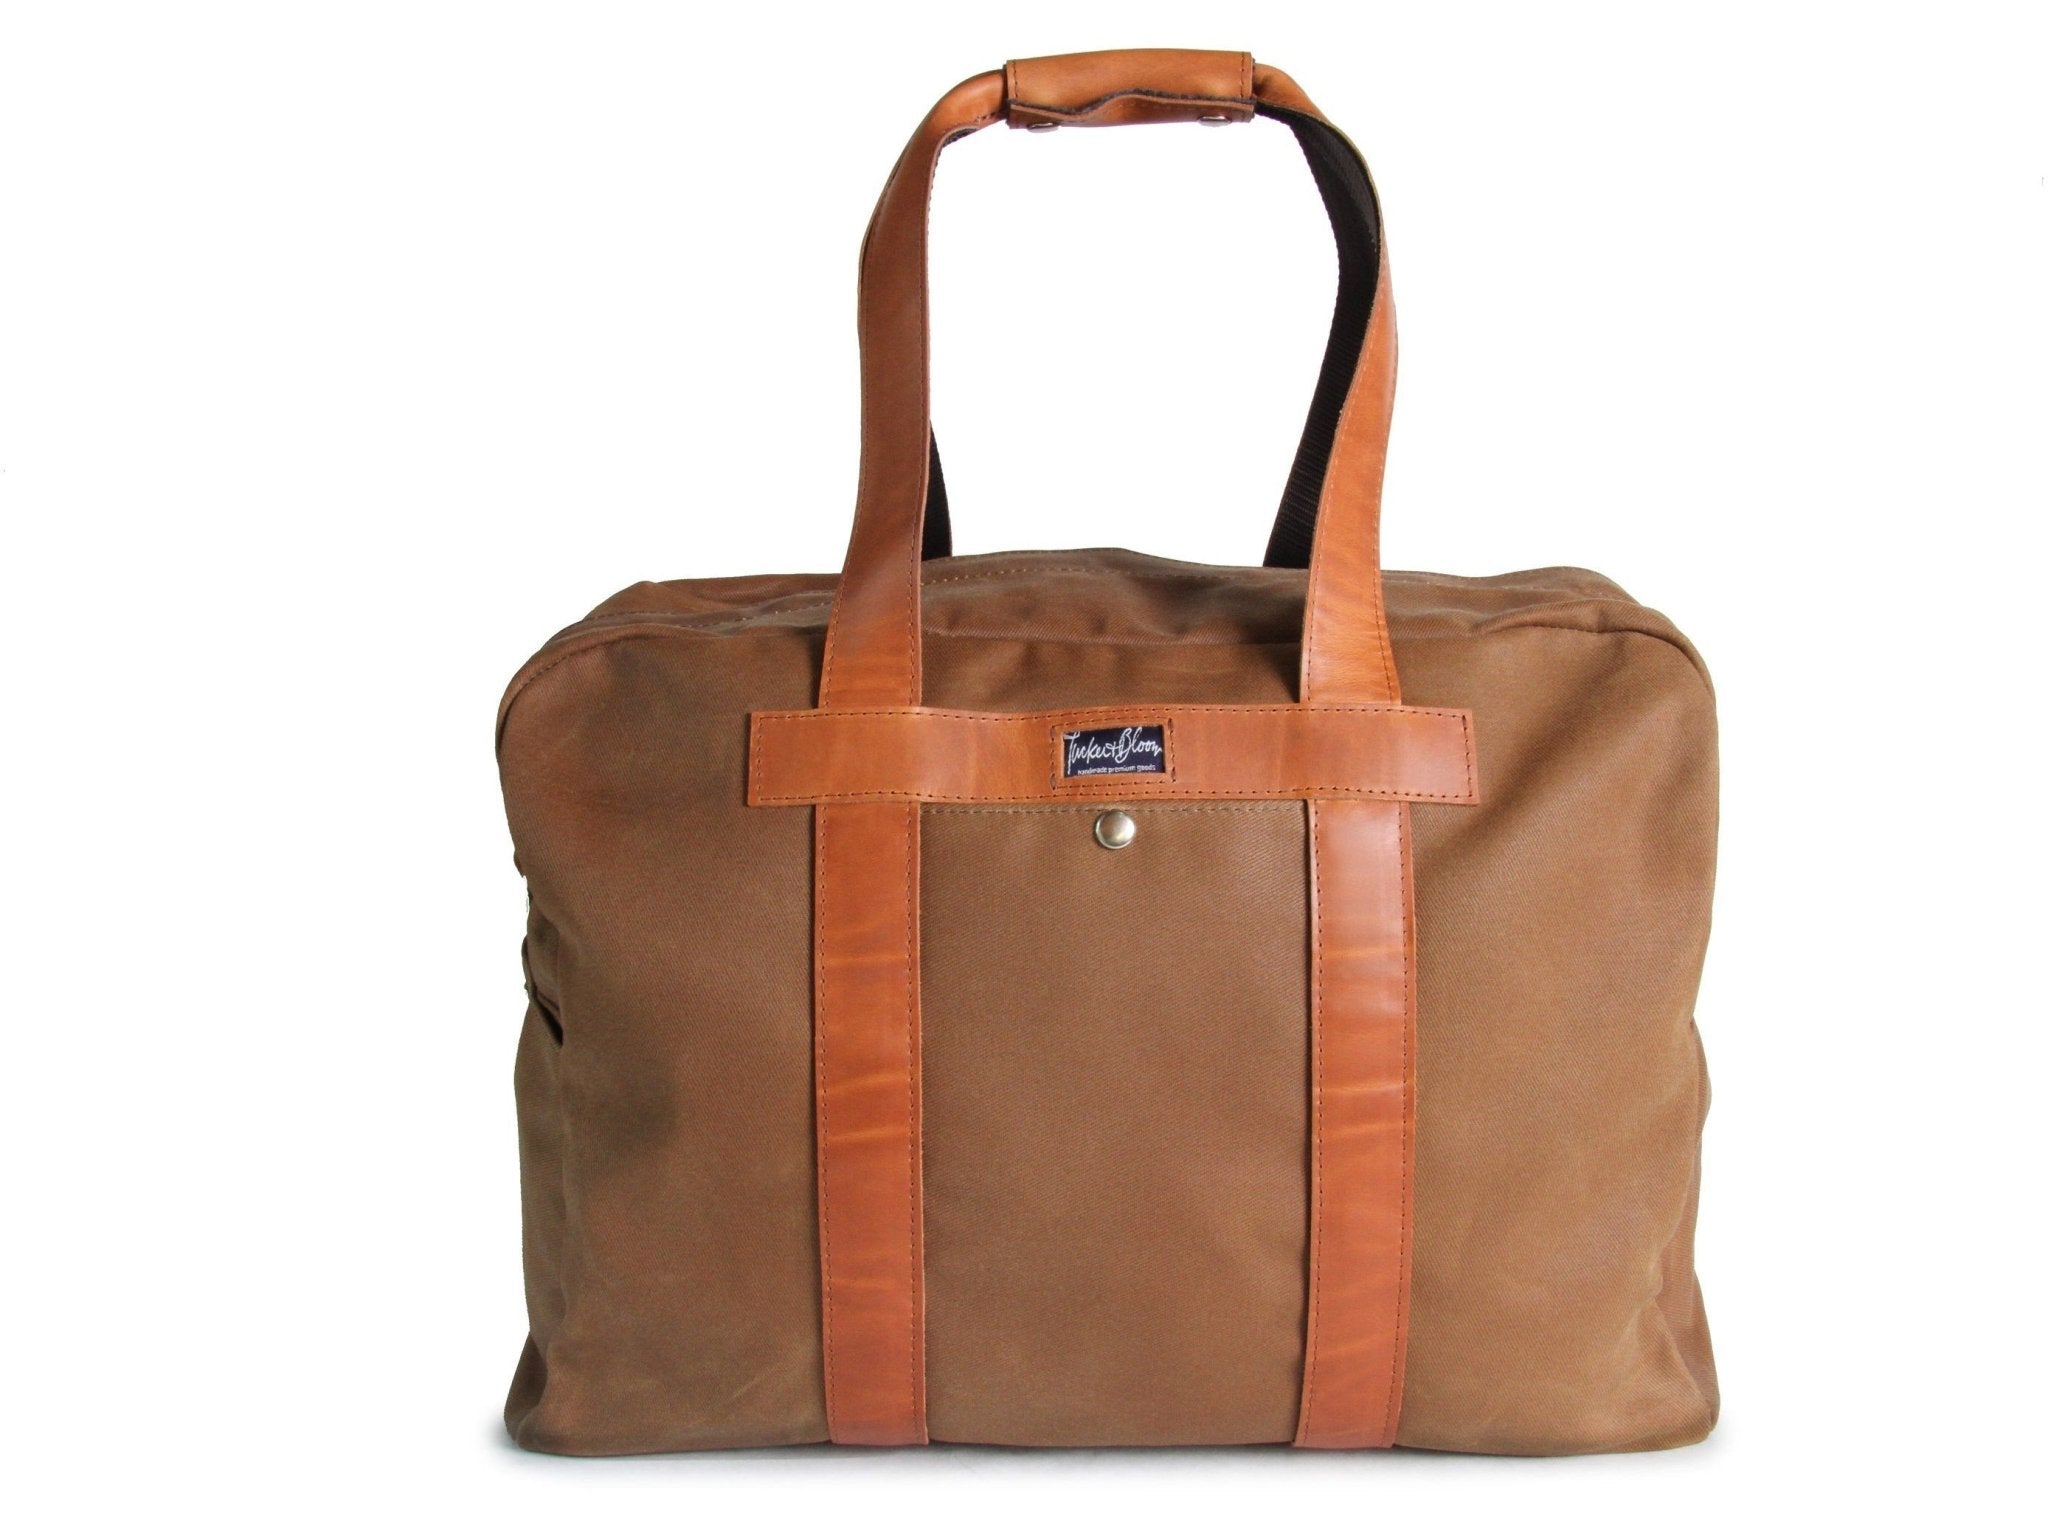 Waxed Canvas Duffel Bag Weekender Holdall Luggage Travel Bag